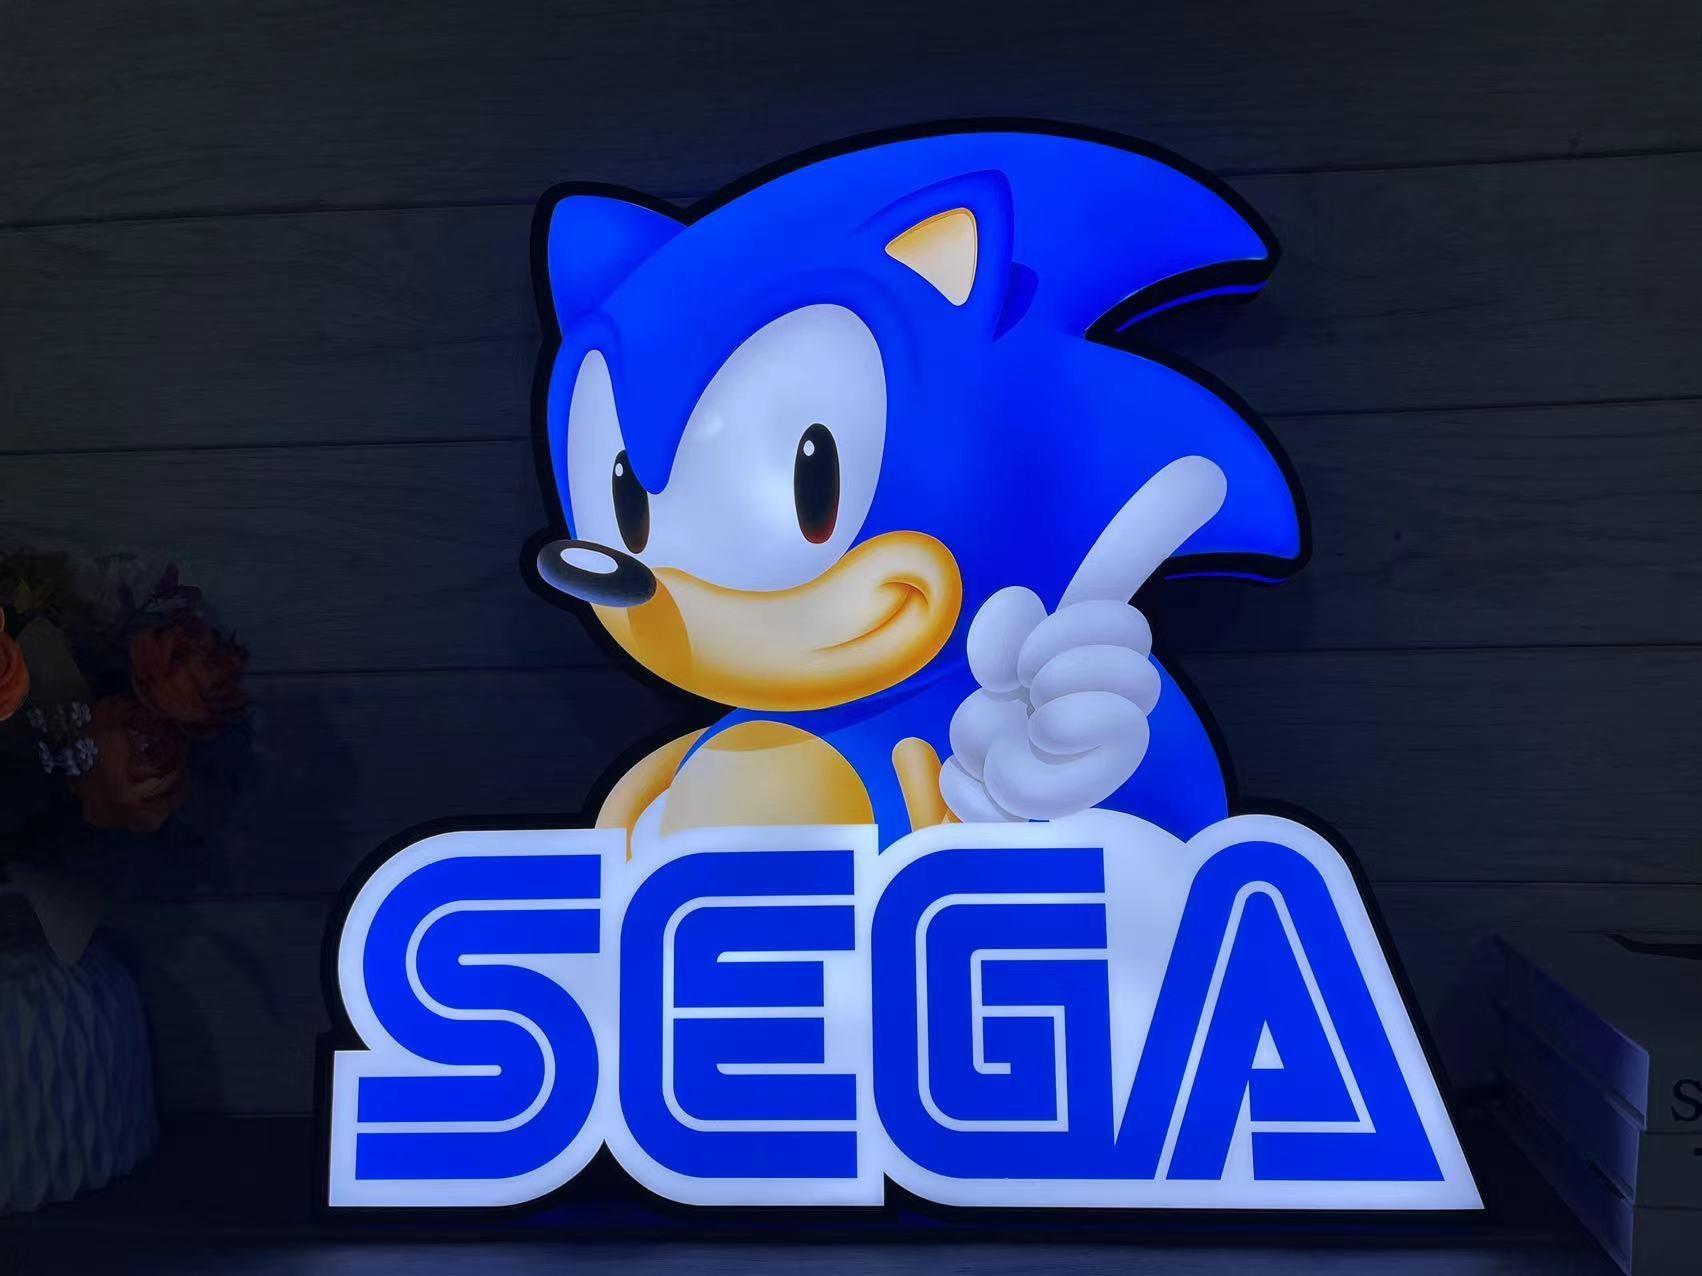 Sonic the Hedgehog SEGA Logo 3D LED Light Box, Sega Sign Lightbox, Perfect for Game Room, Bedroom, Functional Dimmer, 5V, USB Plug In - FYLZGO Signs